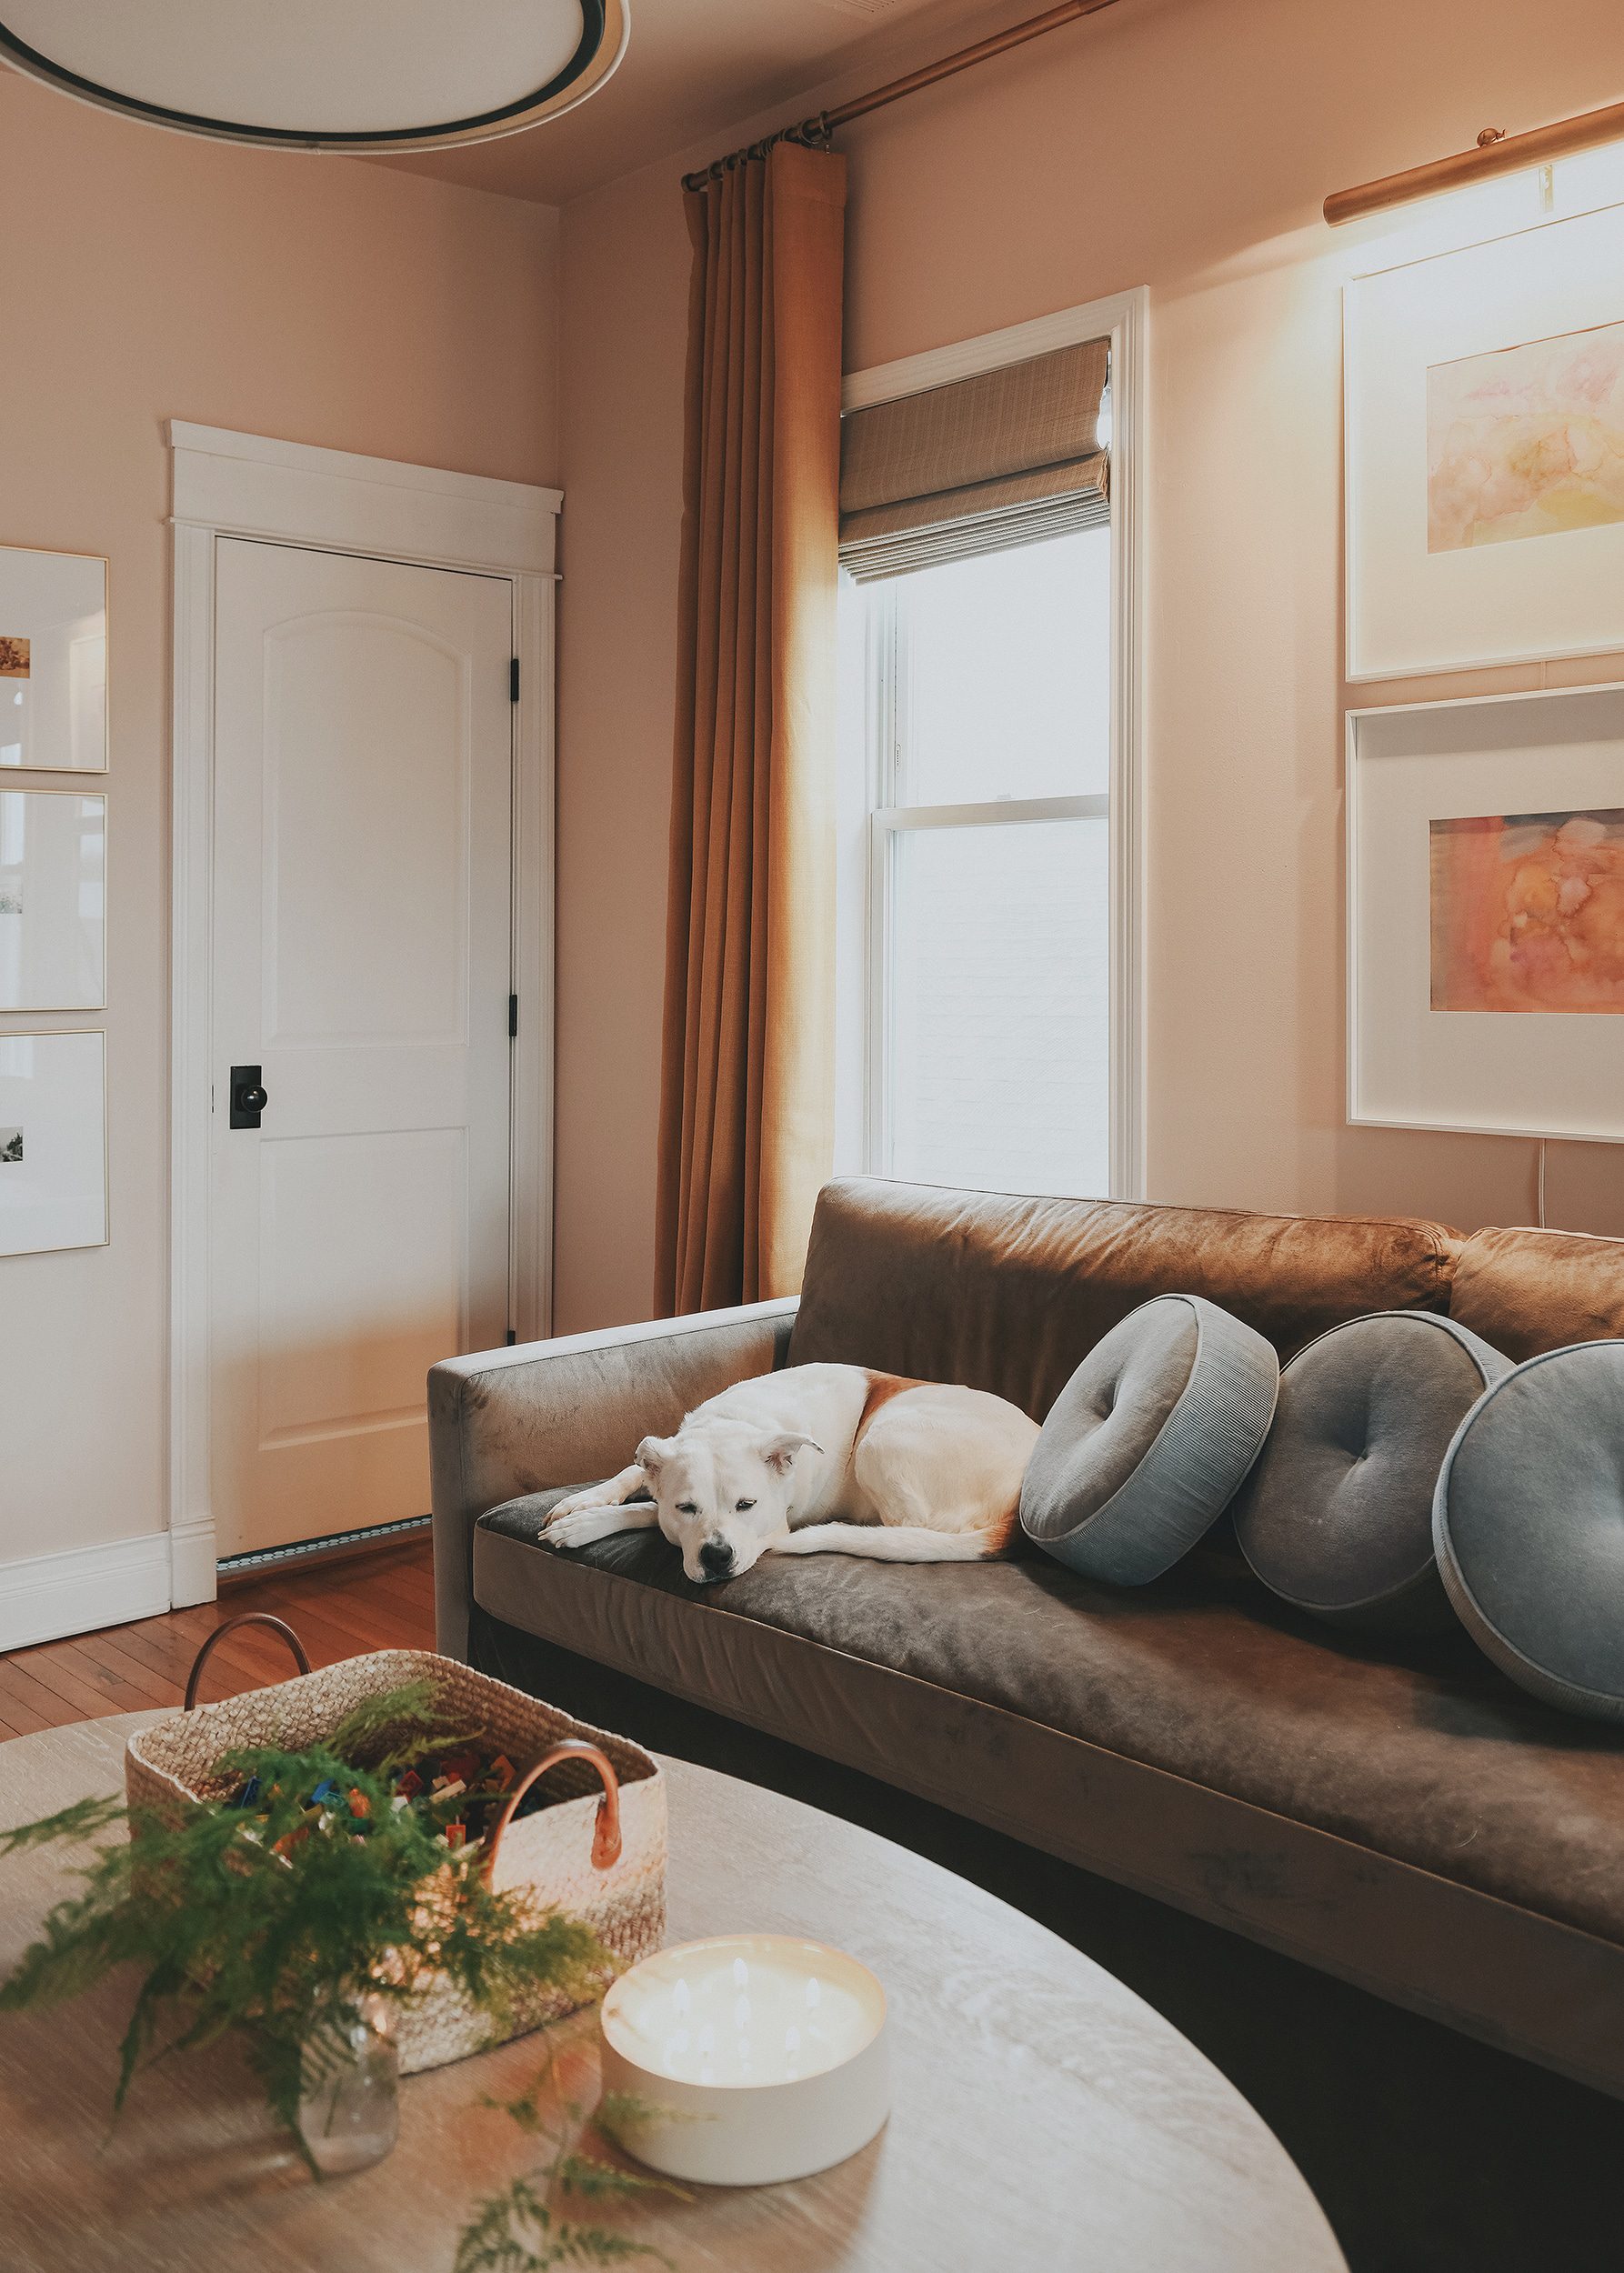 Family room with peach walls, gold curtains and velvet sofa, dog sleeps on sofa | via Yellow Brick Home